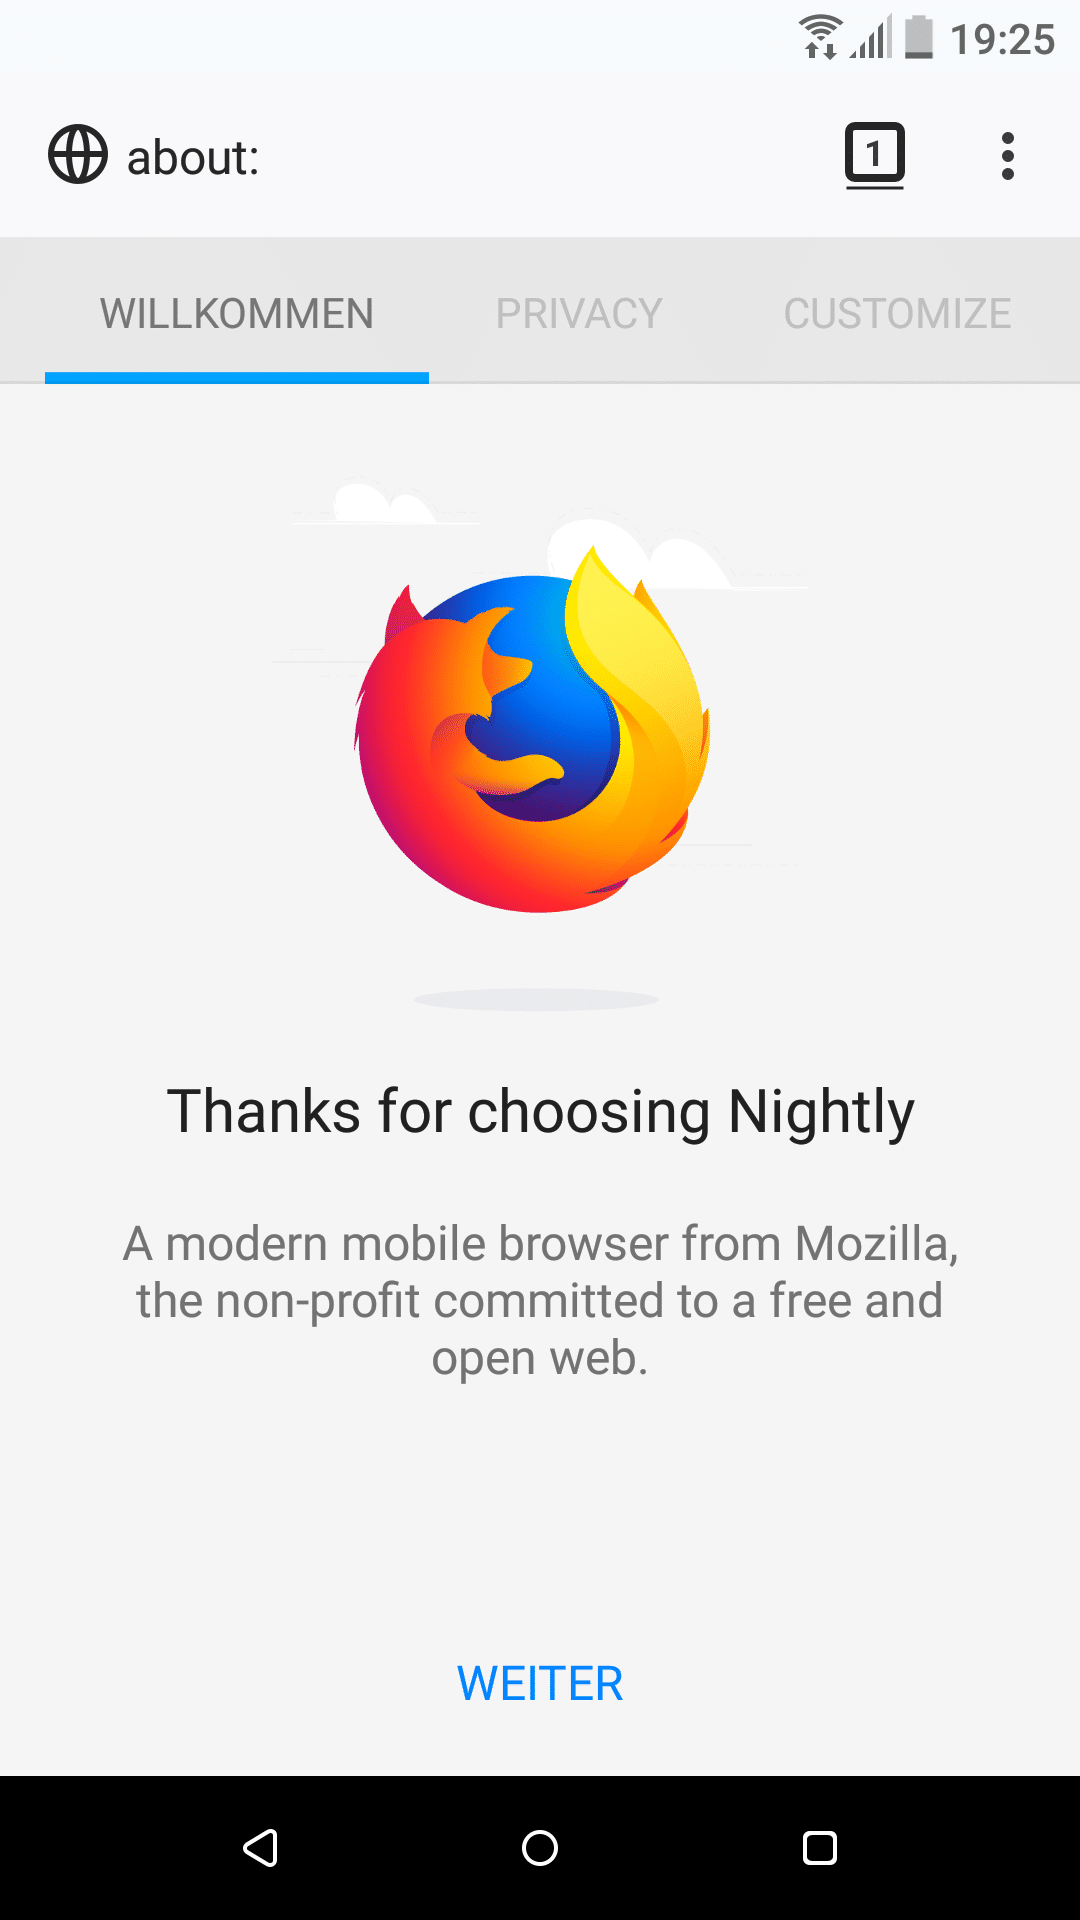 Firefox Neues Logo